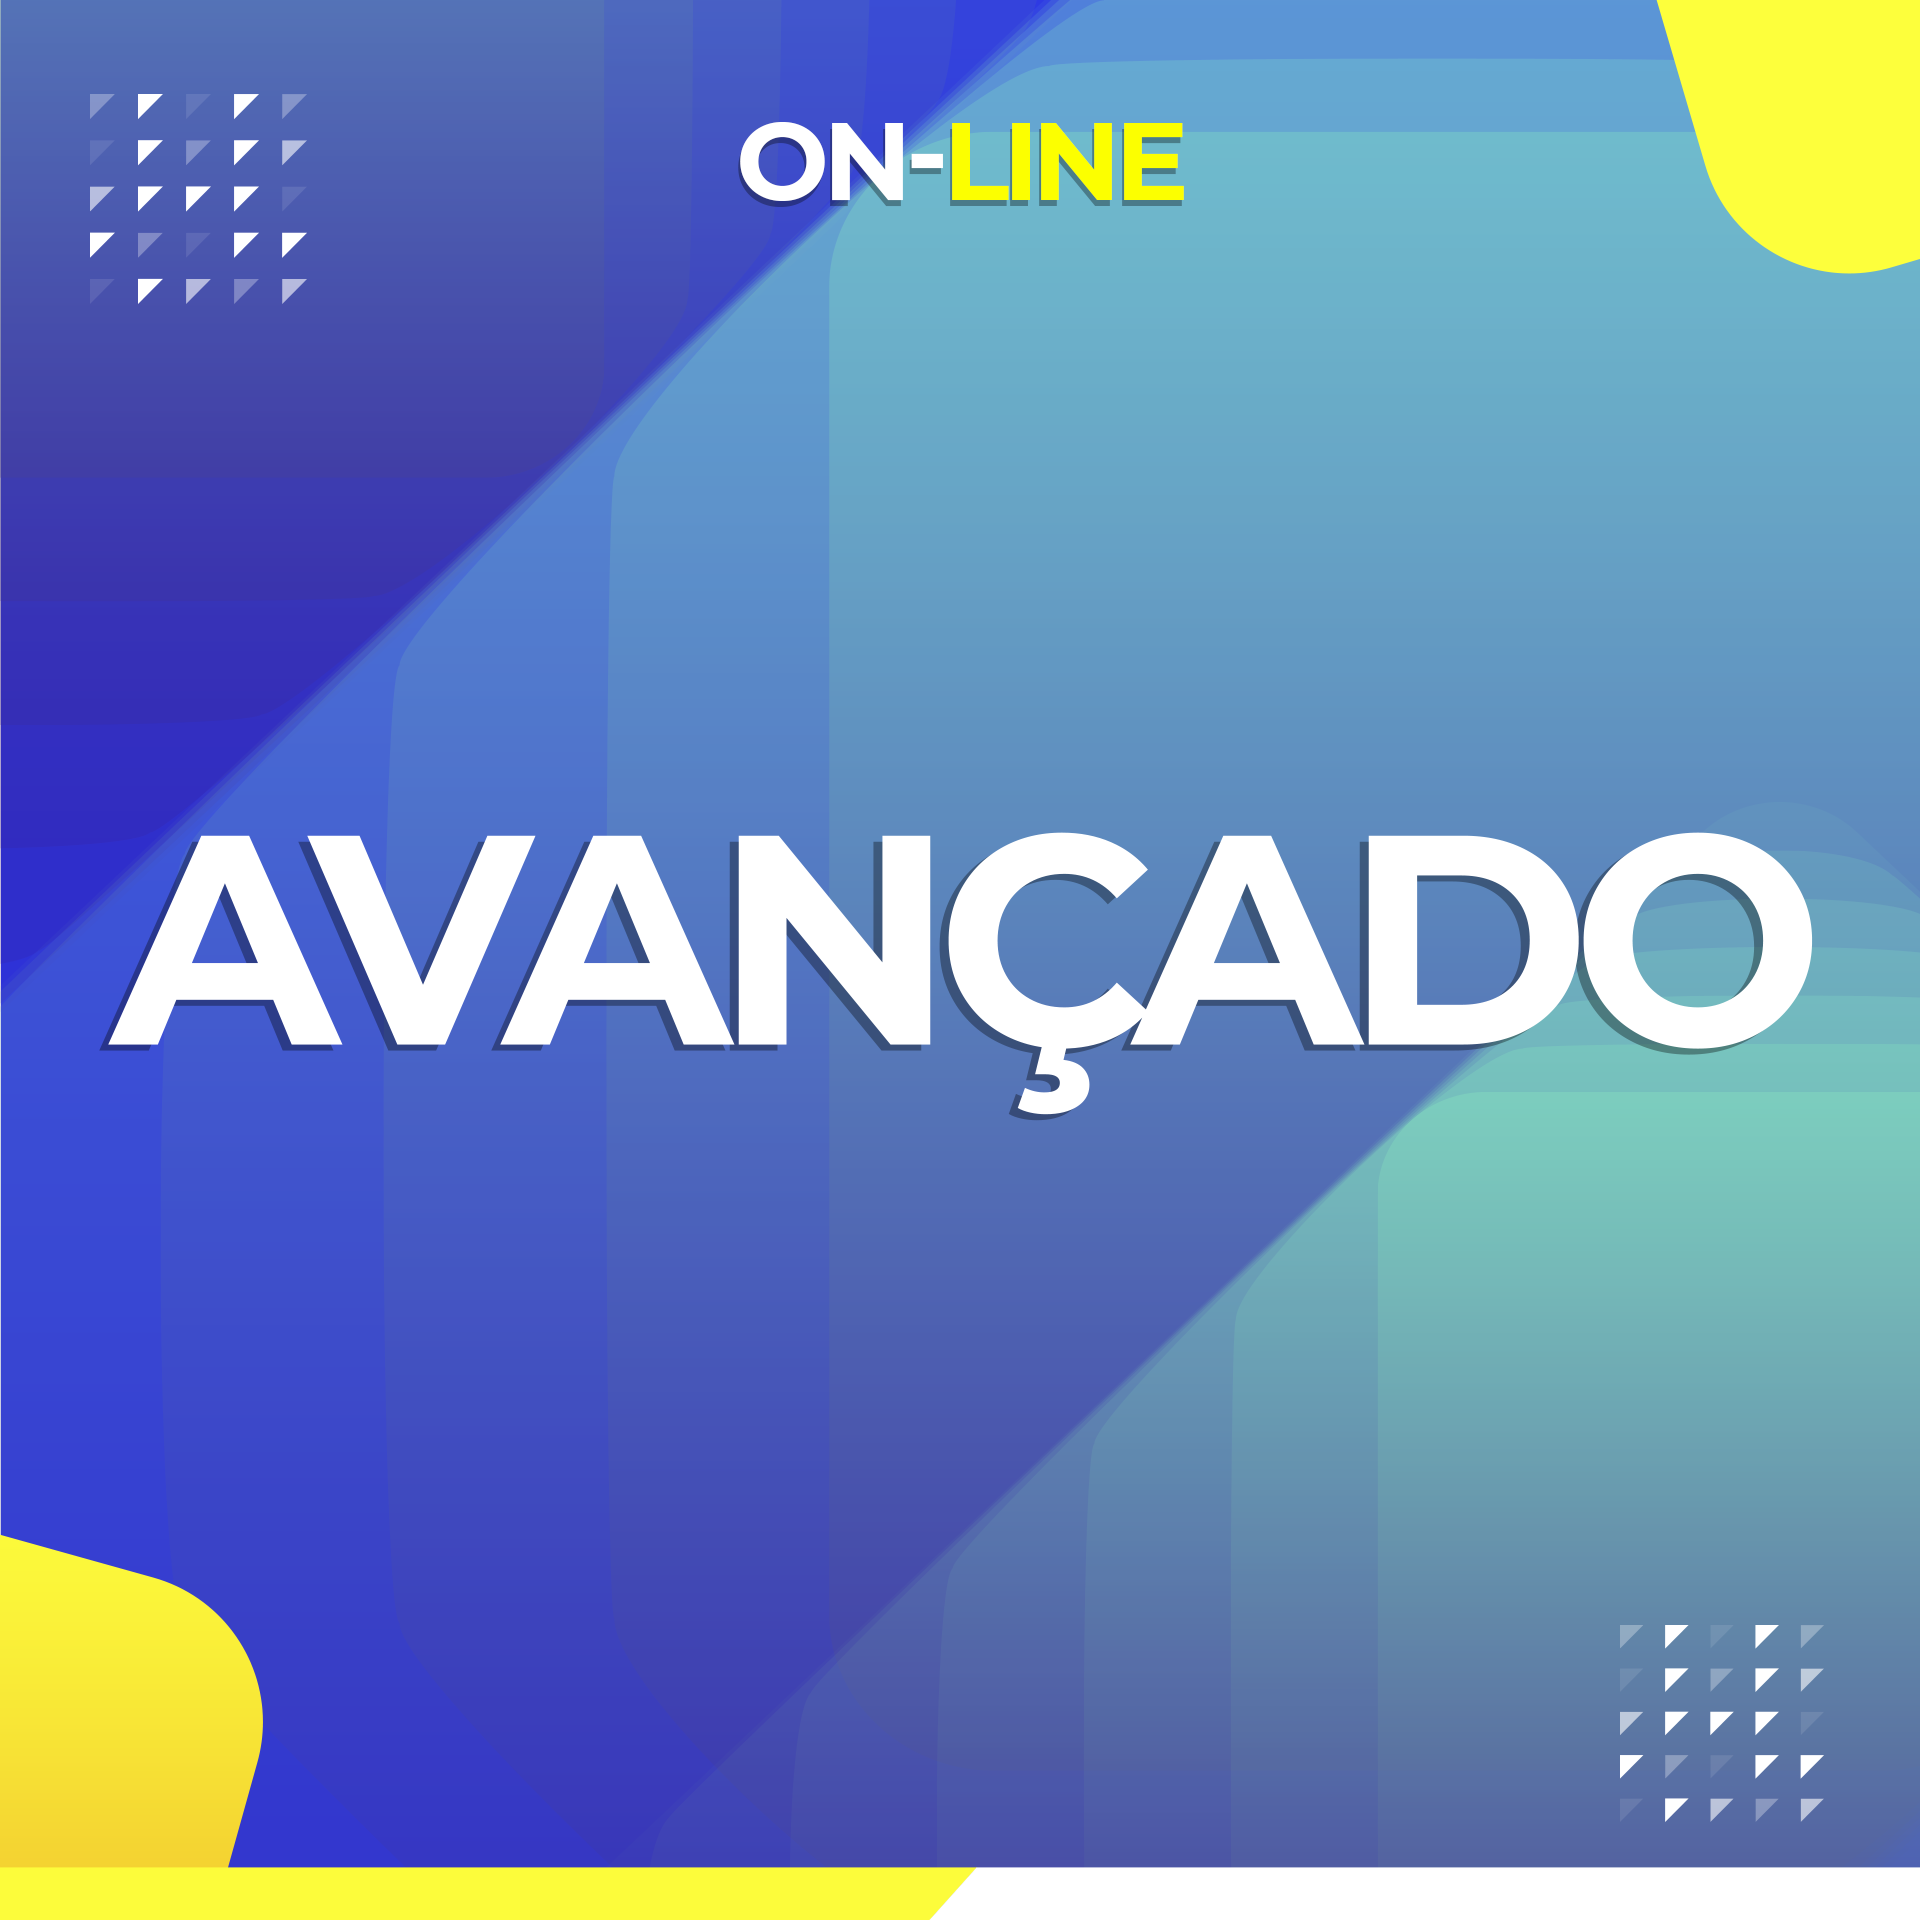 AVANÇADO-ON-LINE